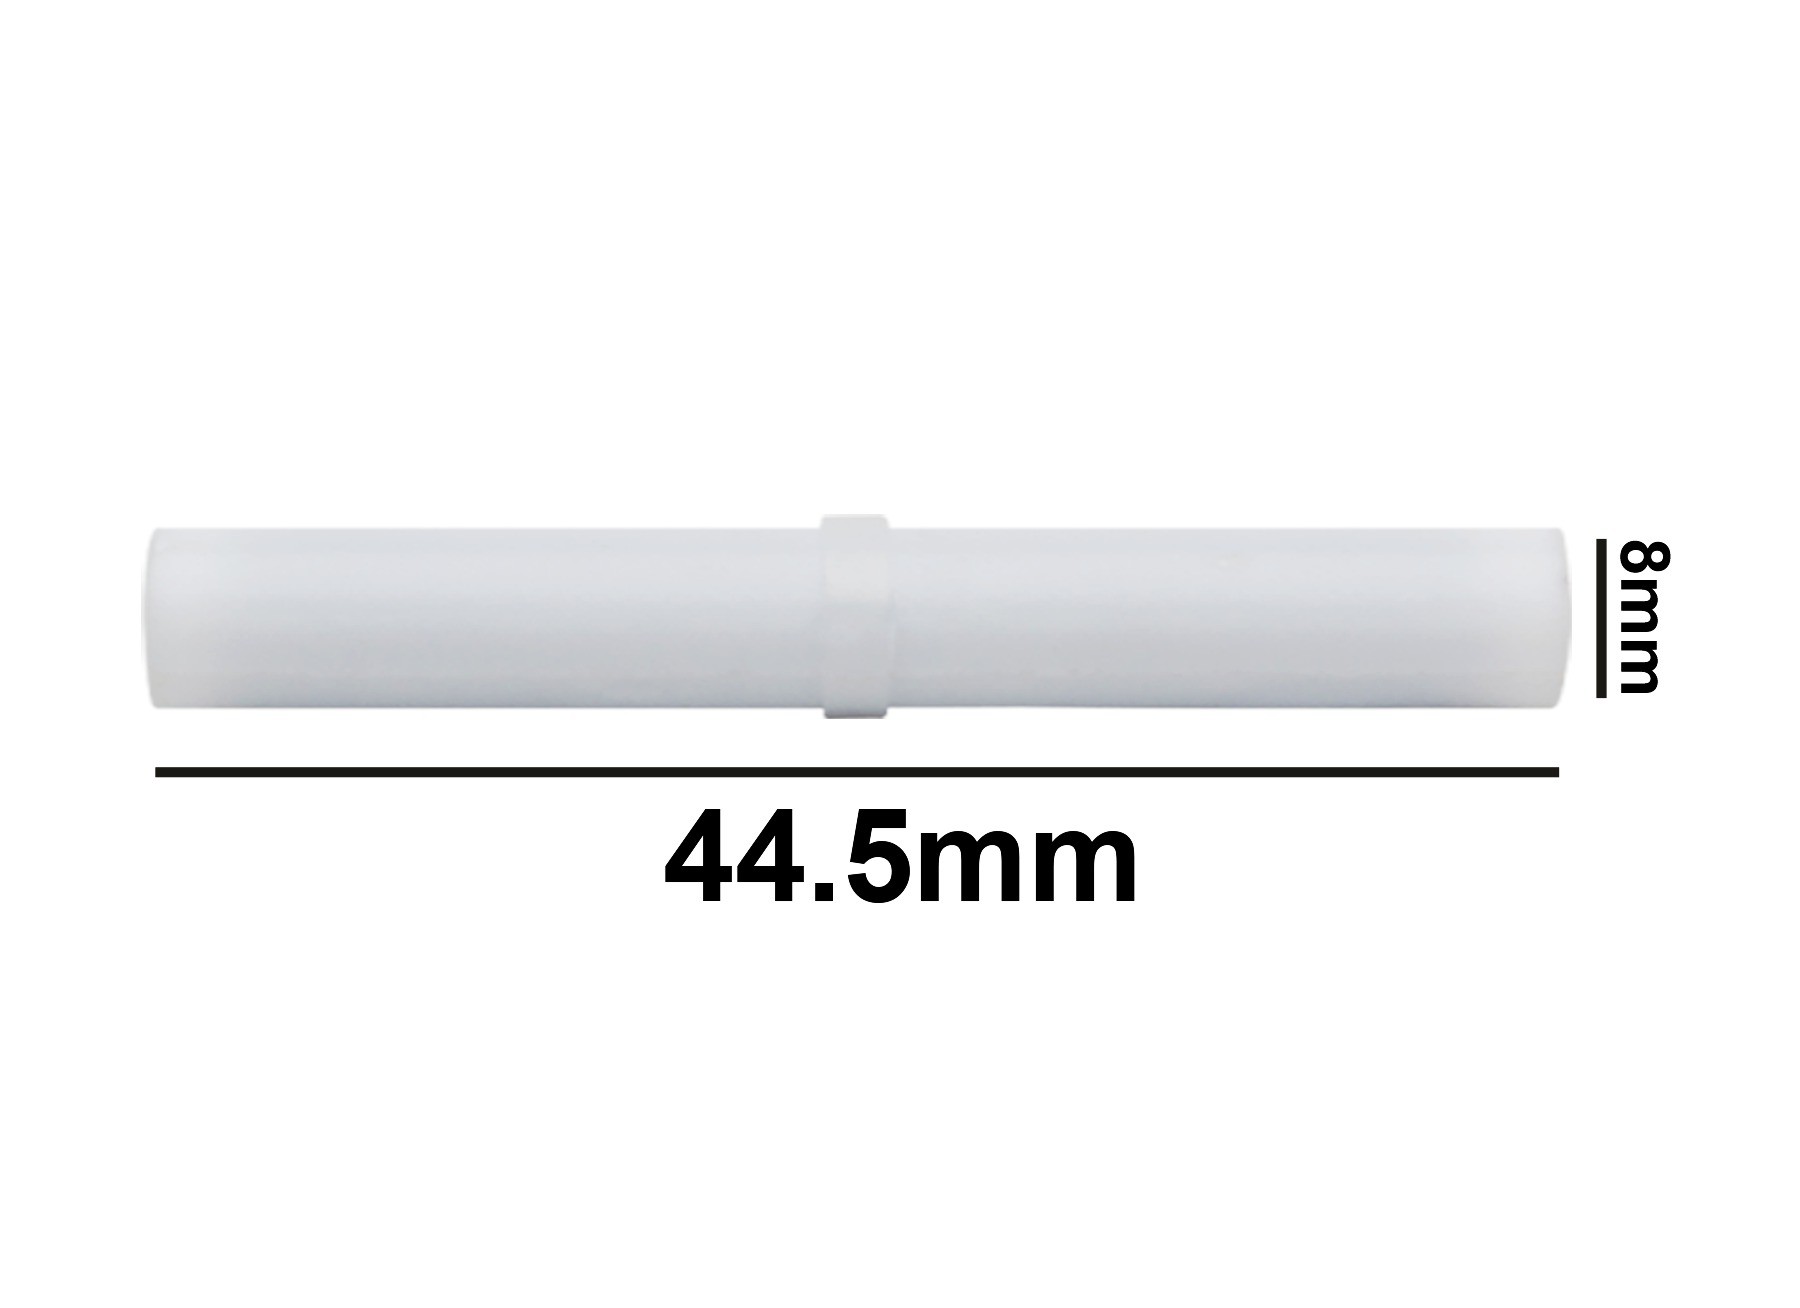 SP Bel-Art Spinbar Teflon Cylindrical Magnetic Stirring Bar; 44.5 x 8mm, White